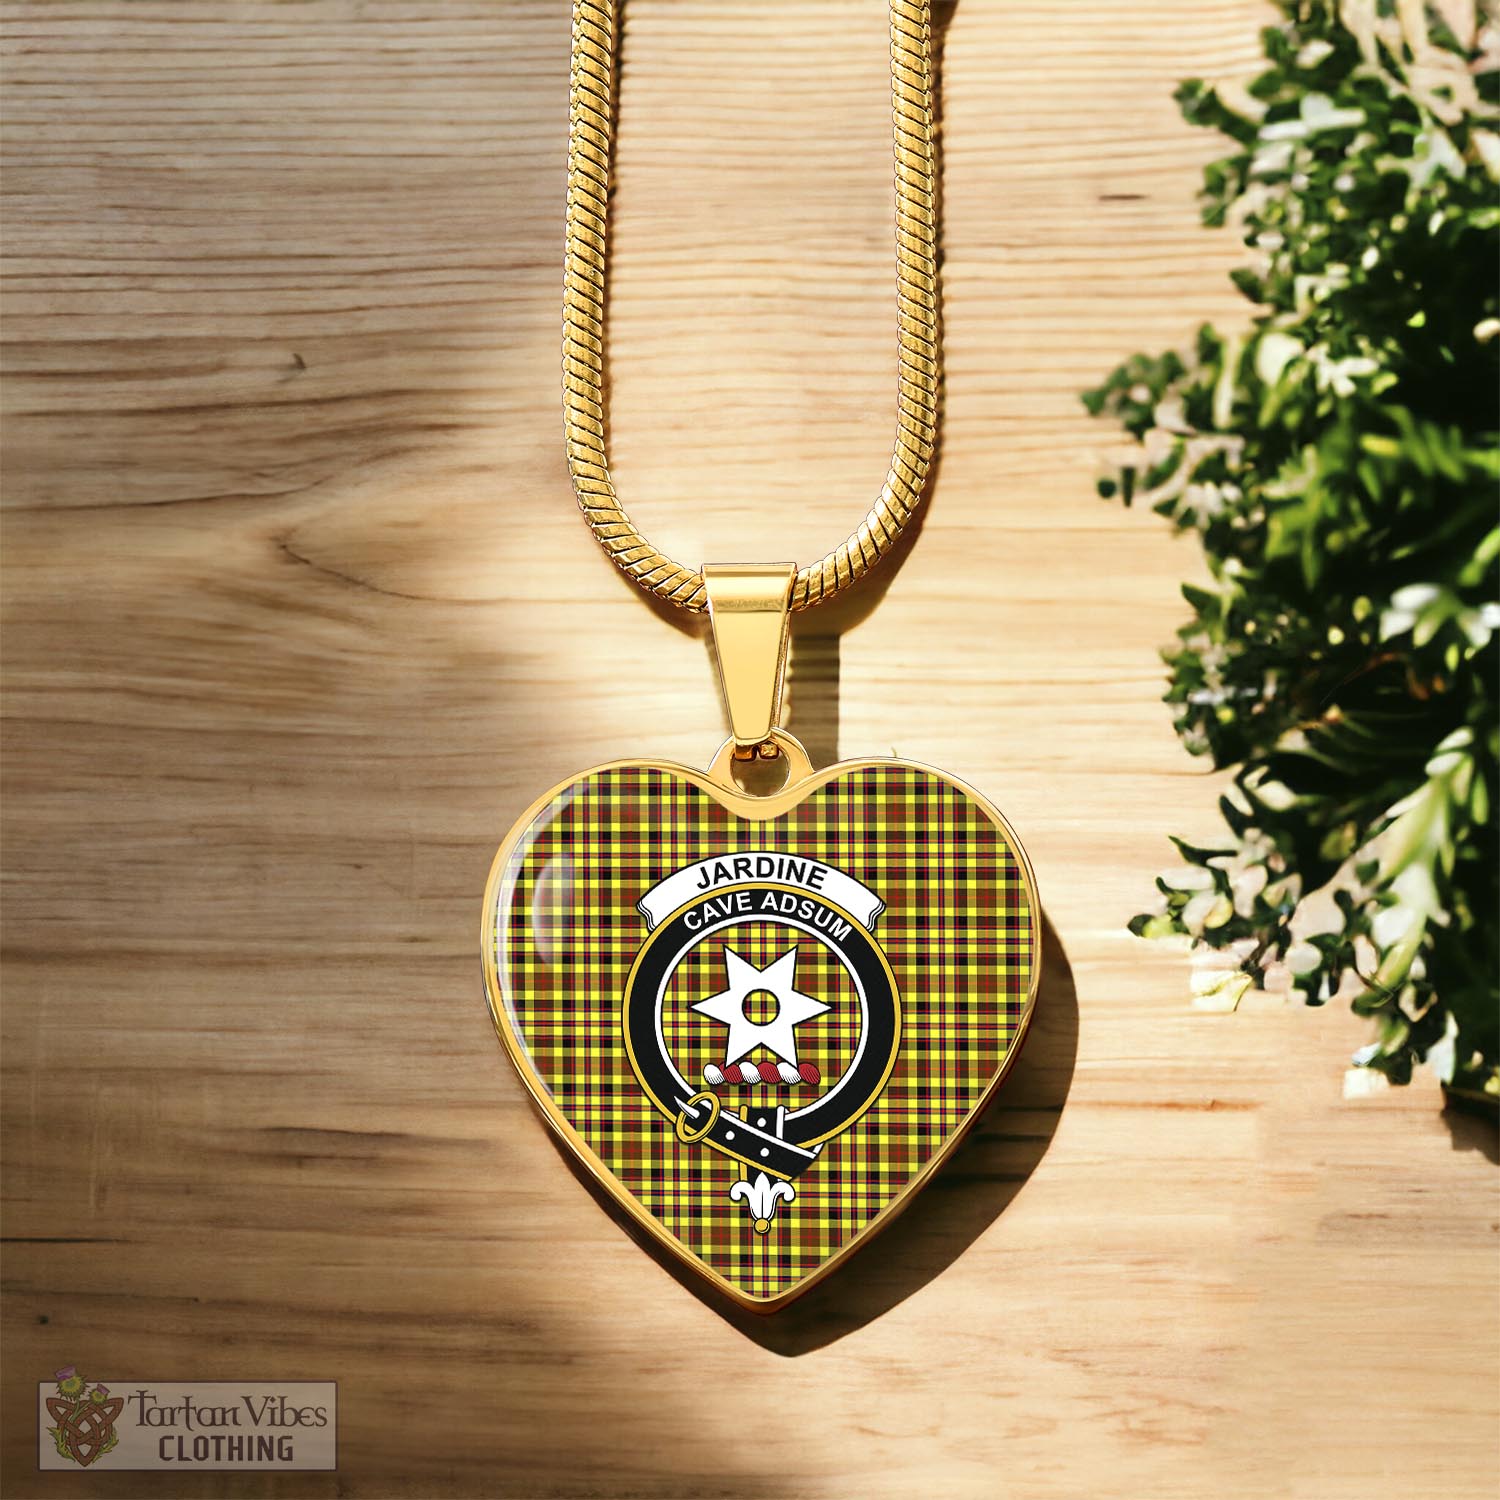 Tartan Vibes Clothing Jardine Modern Tartan Heart Necklace with Family Crest